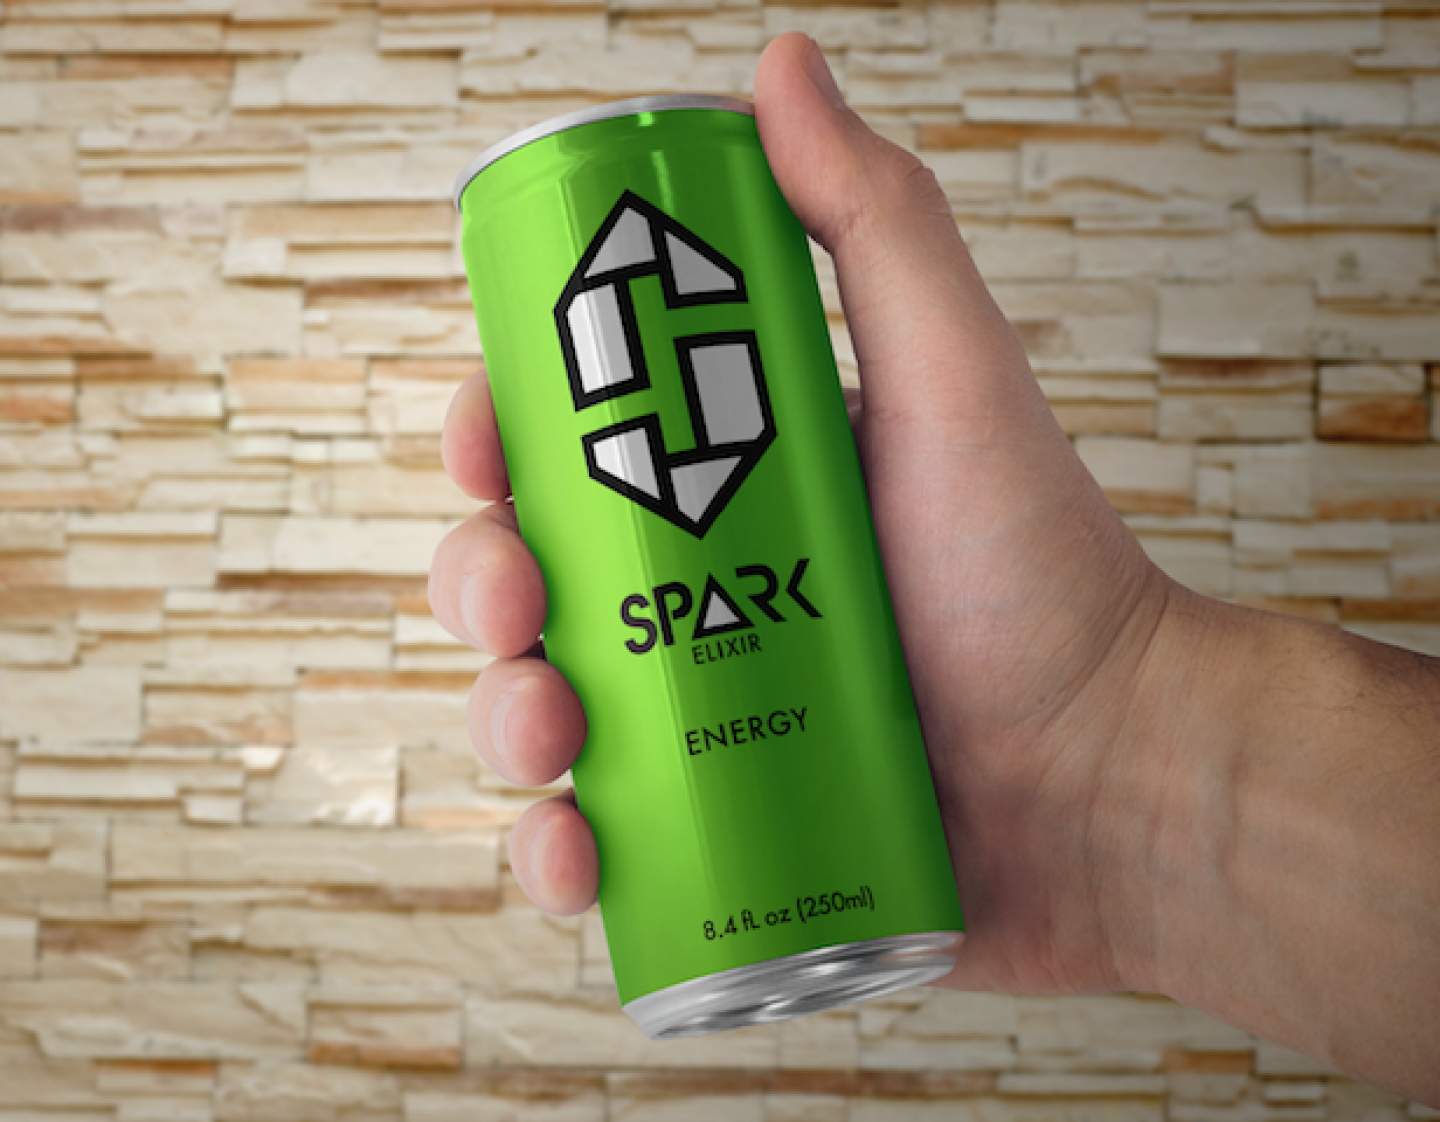 Spark Elixir